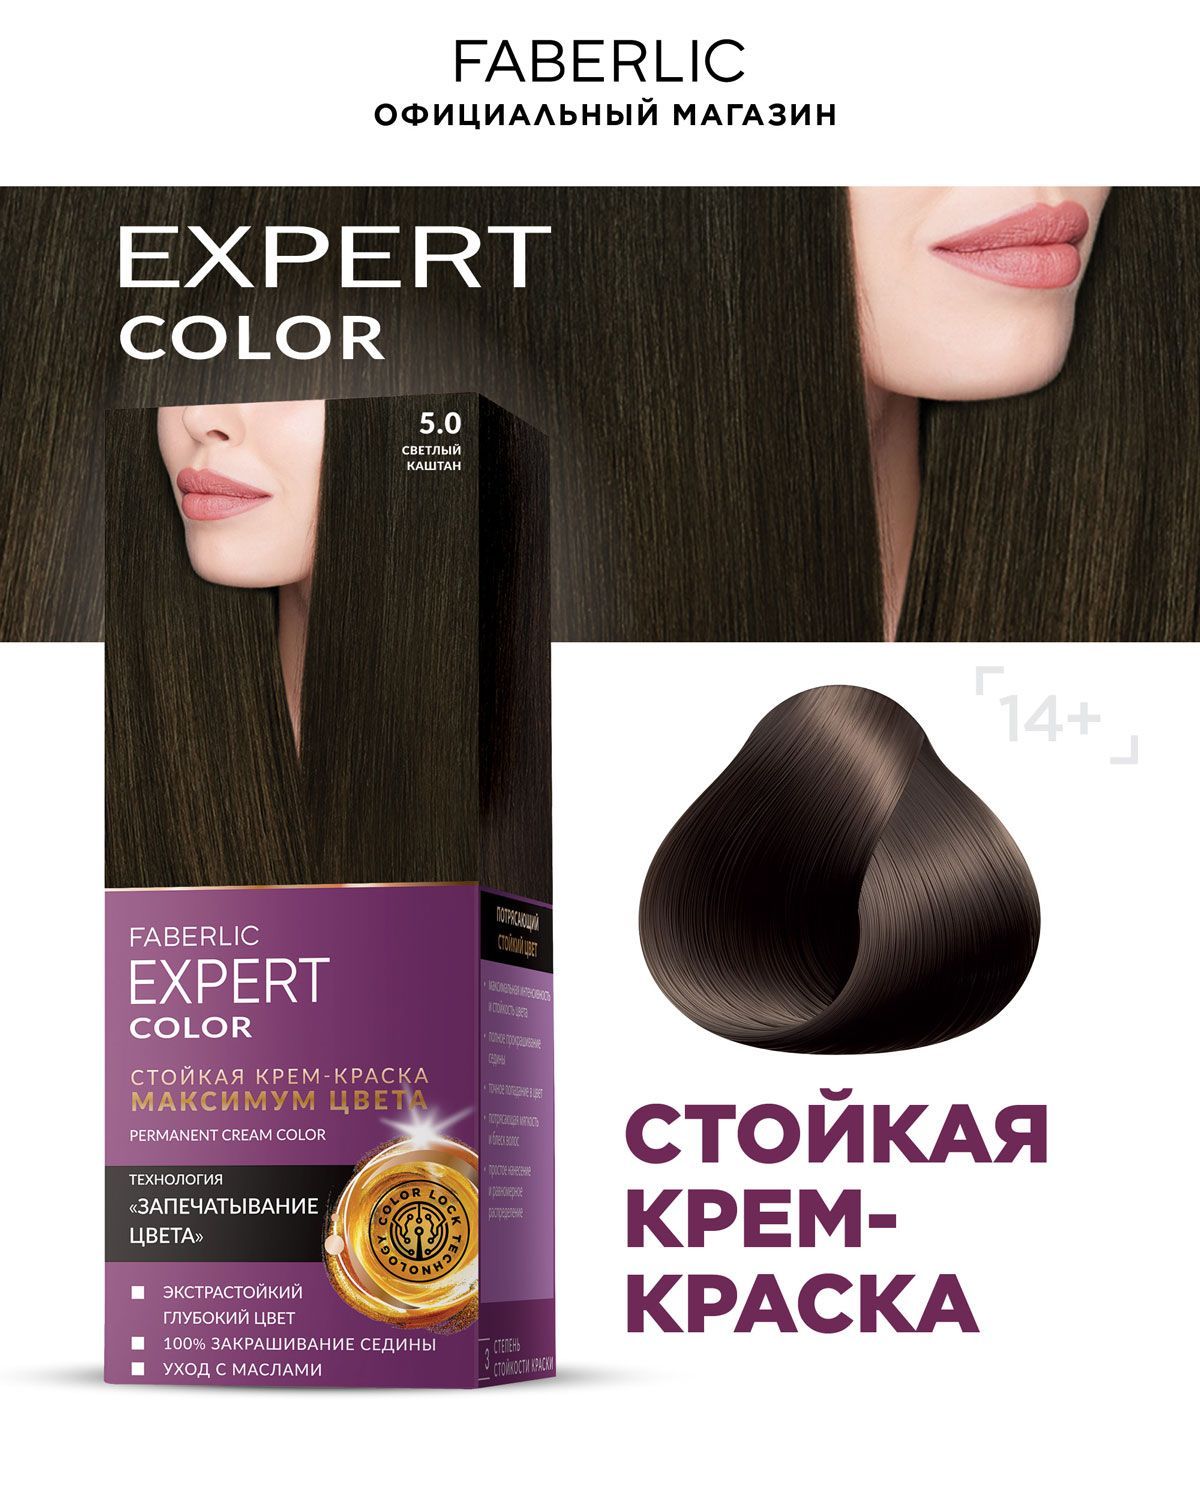 Фаберлик эксперт краска для волос. Краска для волос Expert Color Фаберлик 7.1. Фаберлик краска для волос Expert, тон «8.34 осенний лес». Краска Фаберлик цвет мокко. Фаберлик краска для волос эксперт